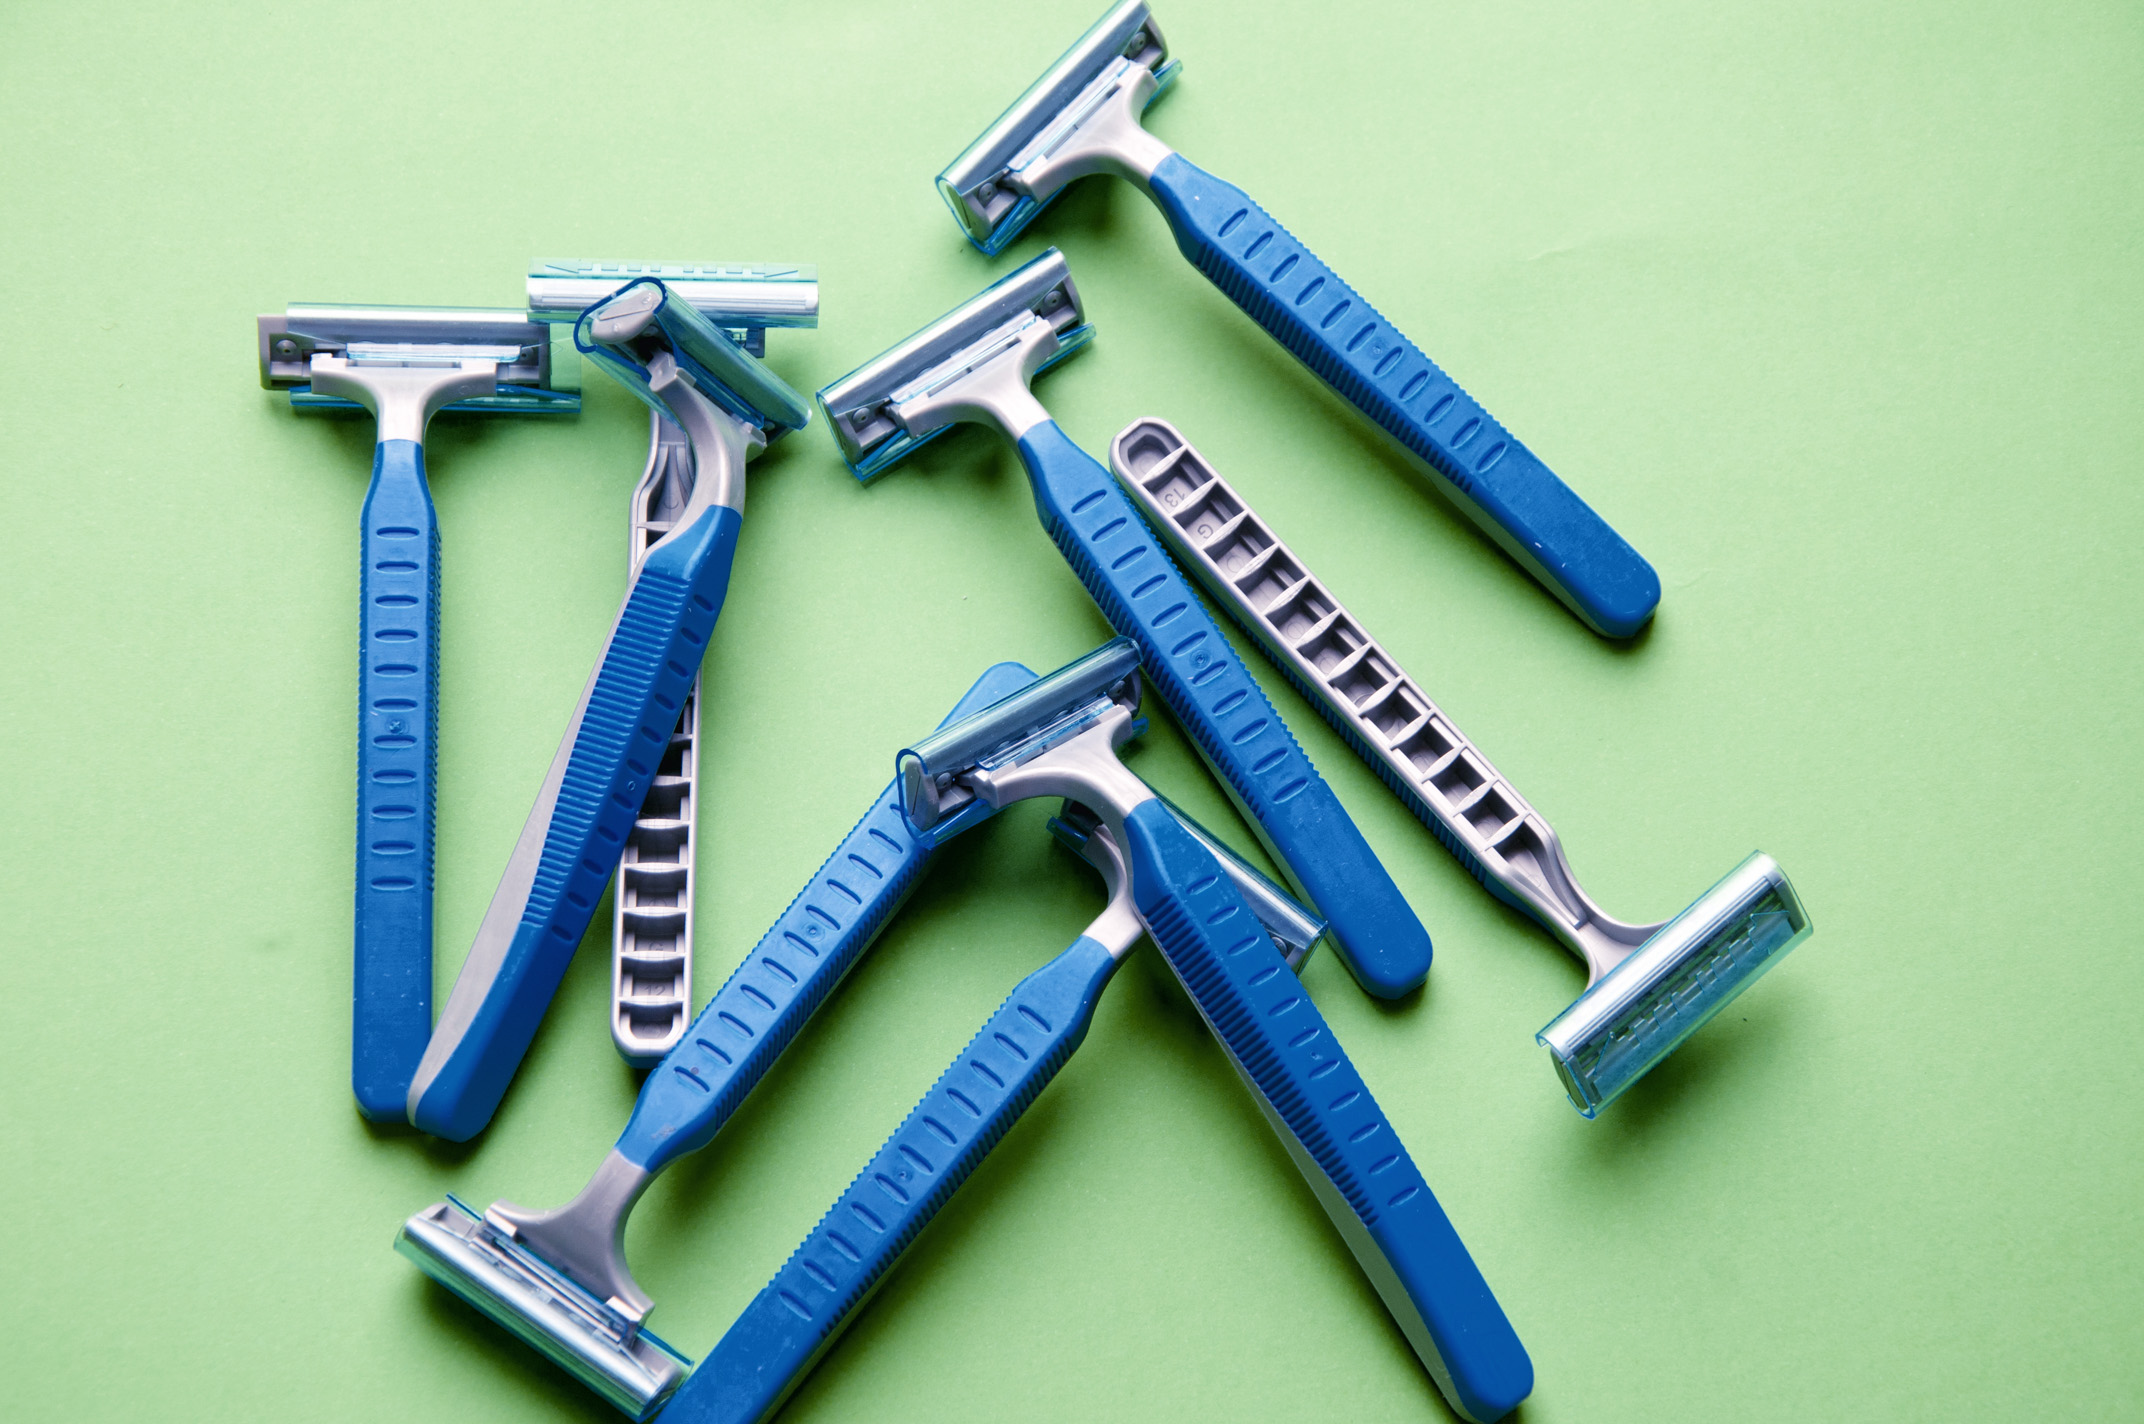 Blue shaving razors displayed.